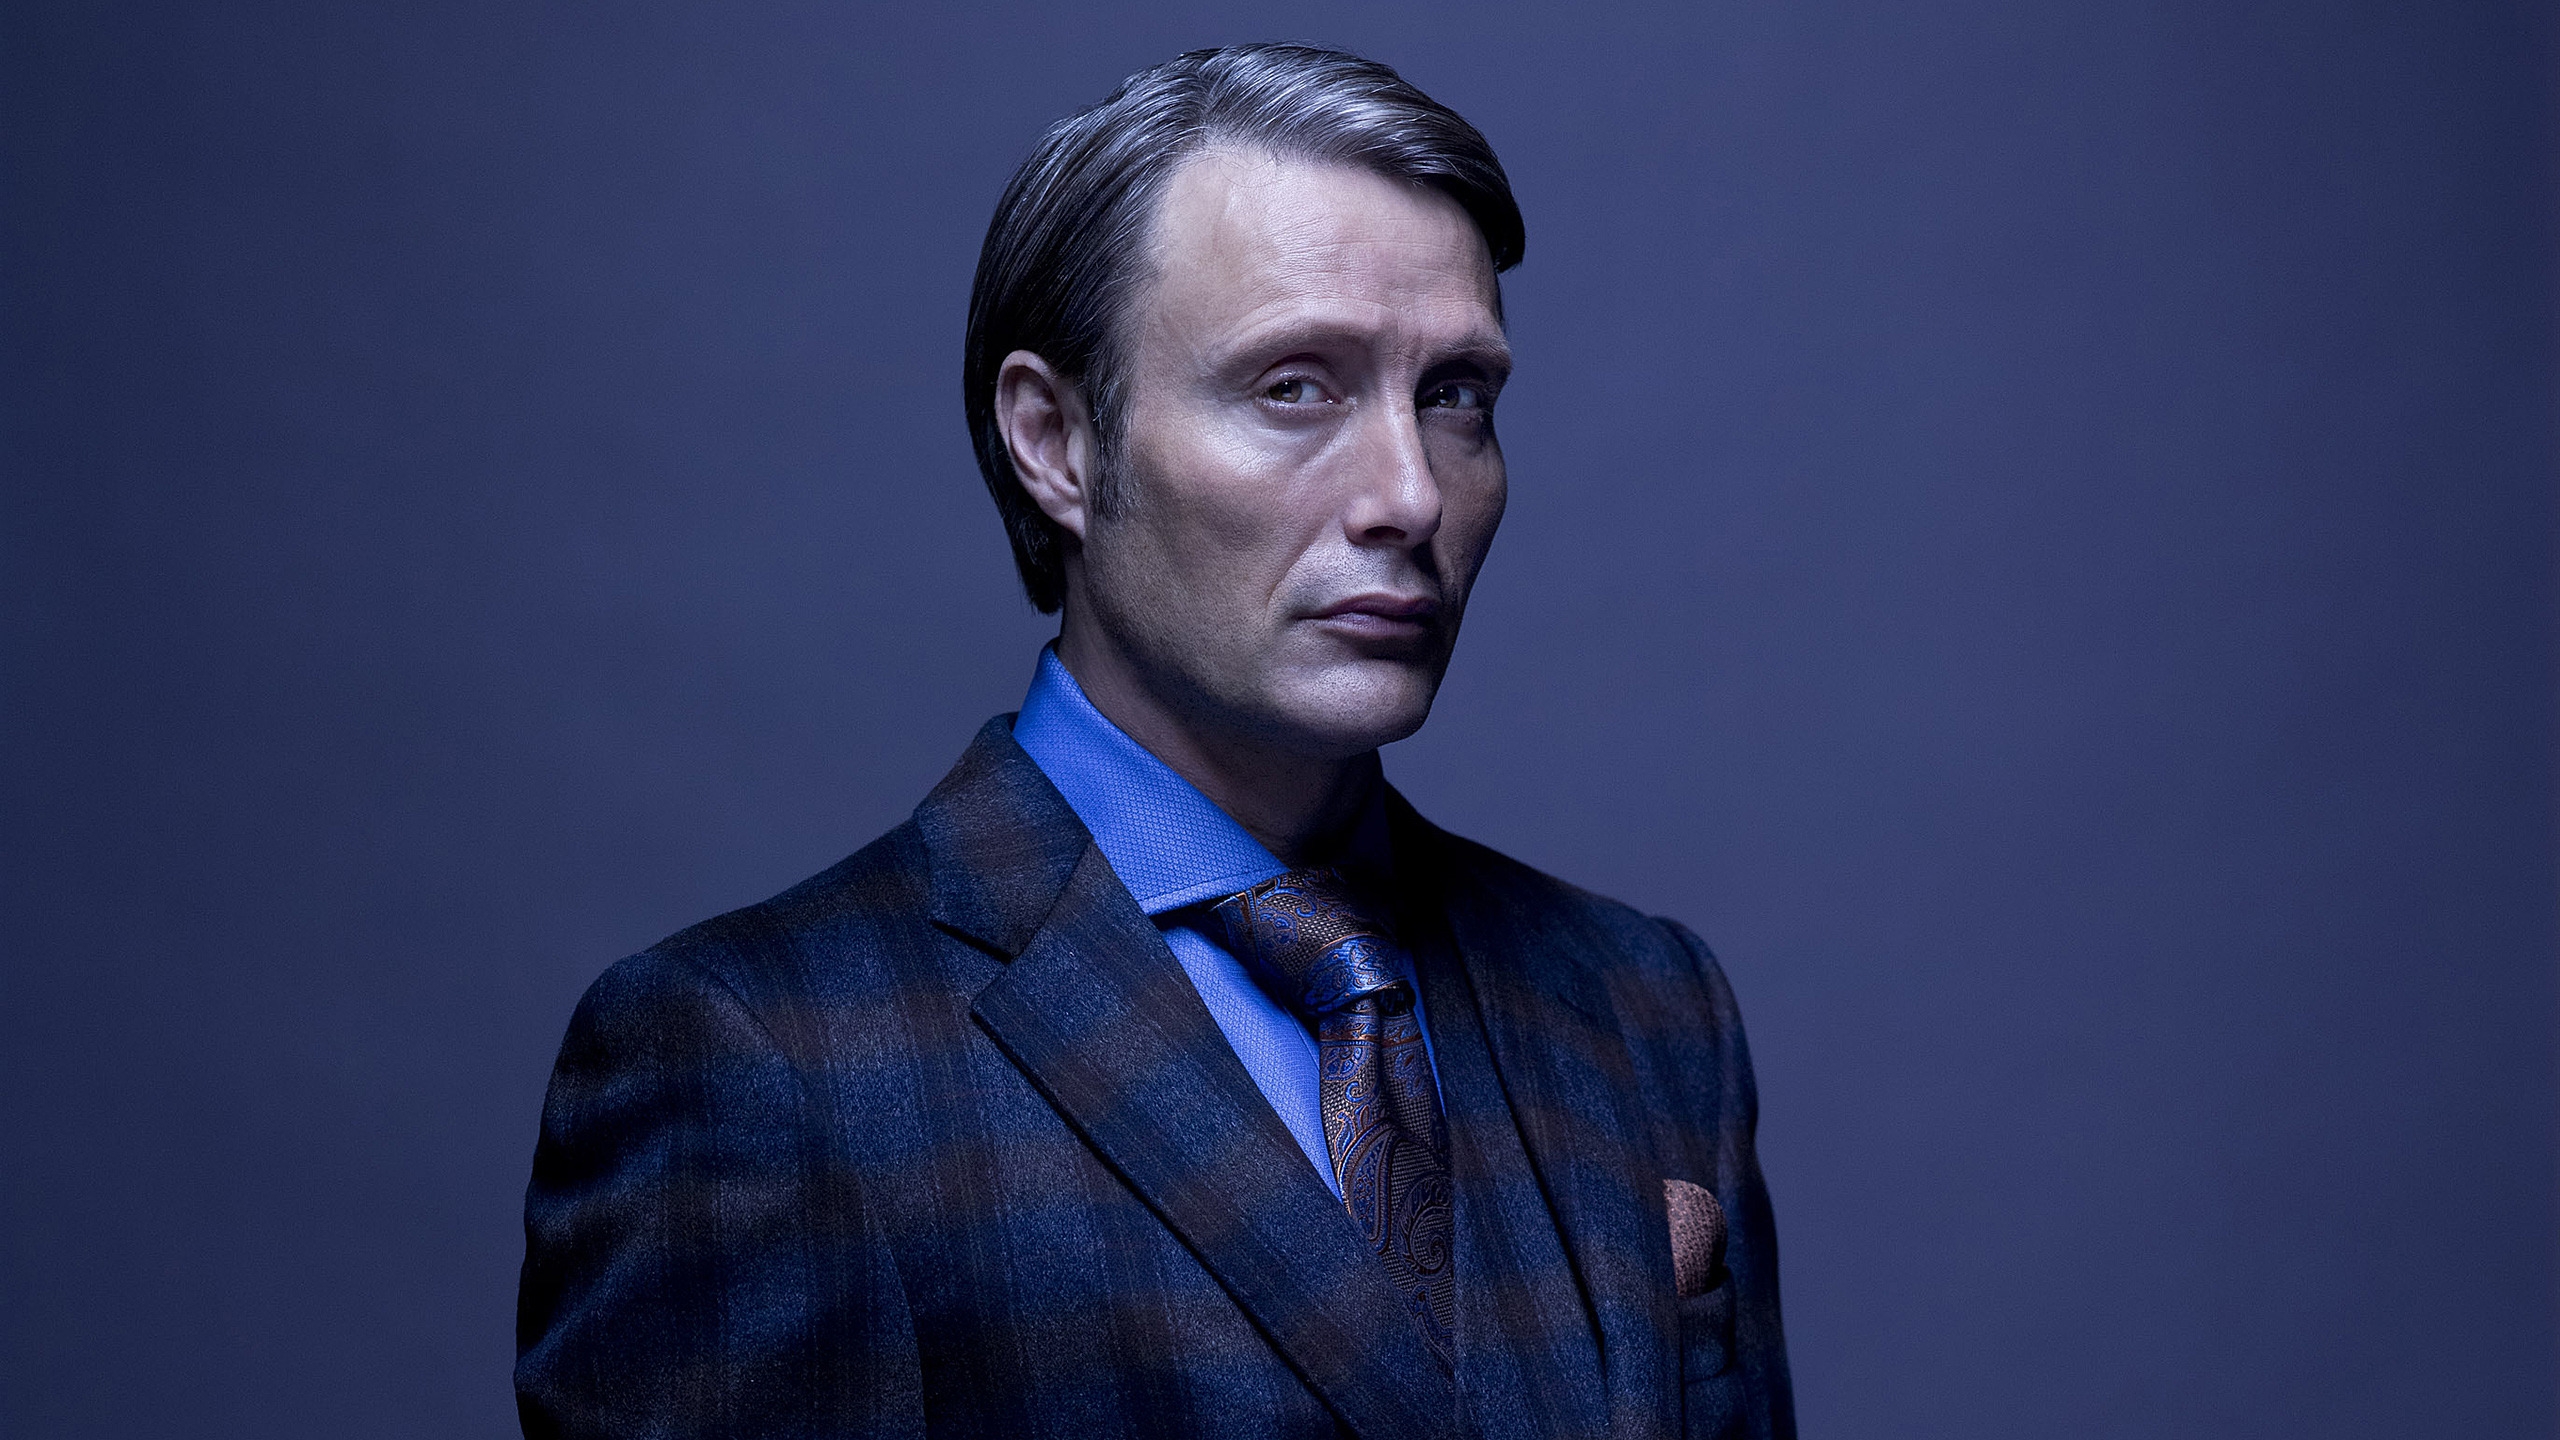 Hannibal Lecter for 2560x1440 HDTV resolution